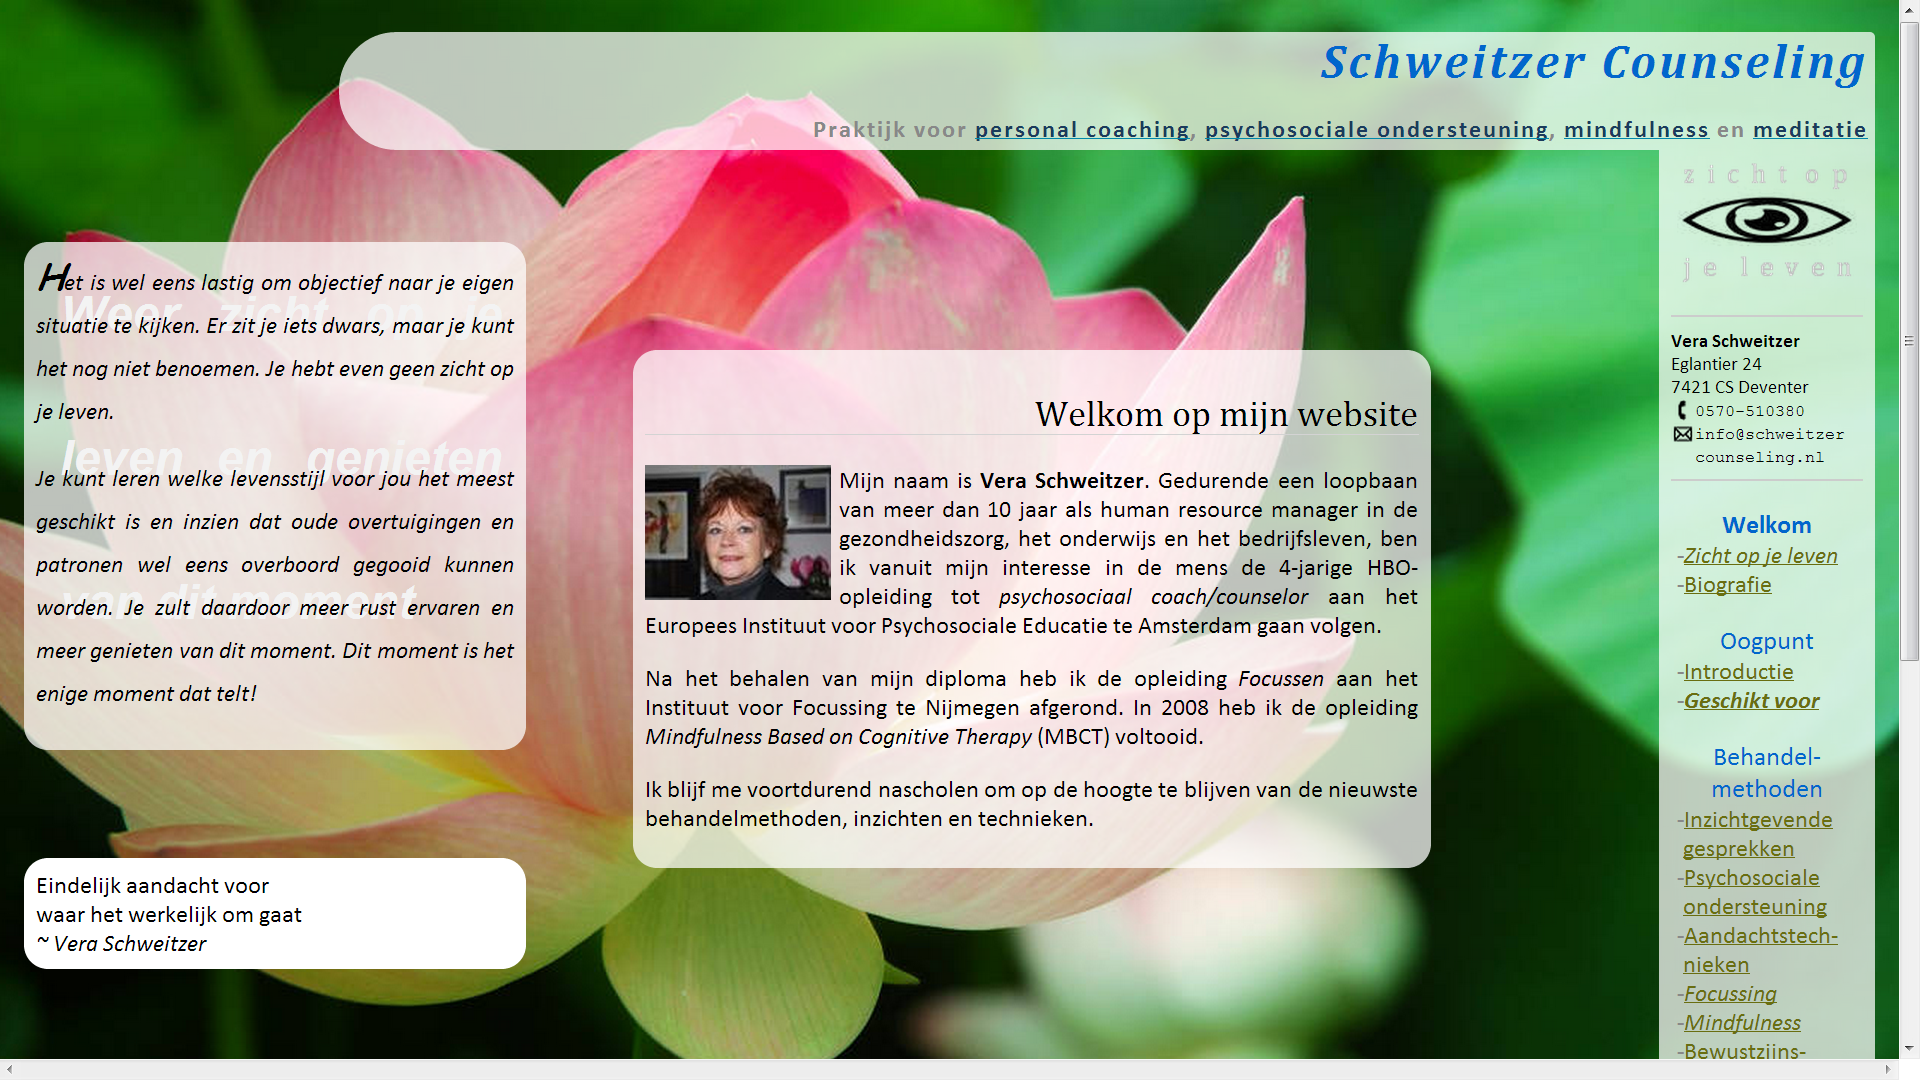 [screenshot www.schweitzercounseling.nl, 2010]